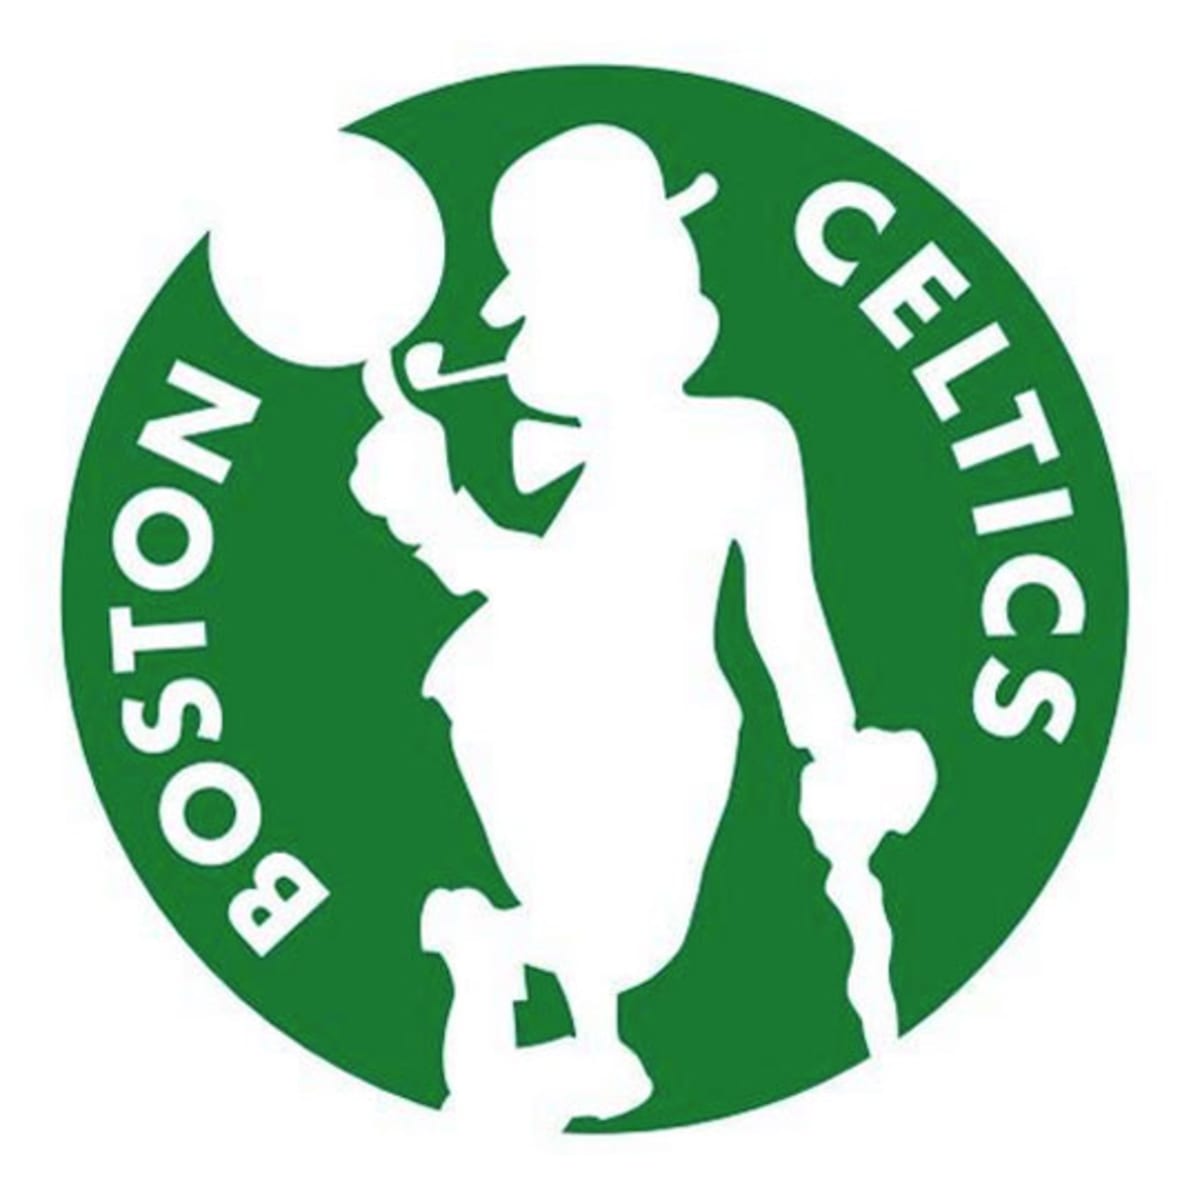 Celtics unveil St. Patrick's Day uniforms - The Boston Globe